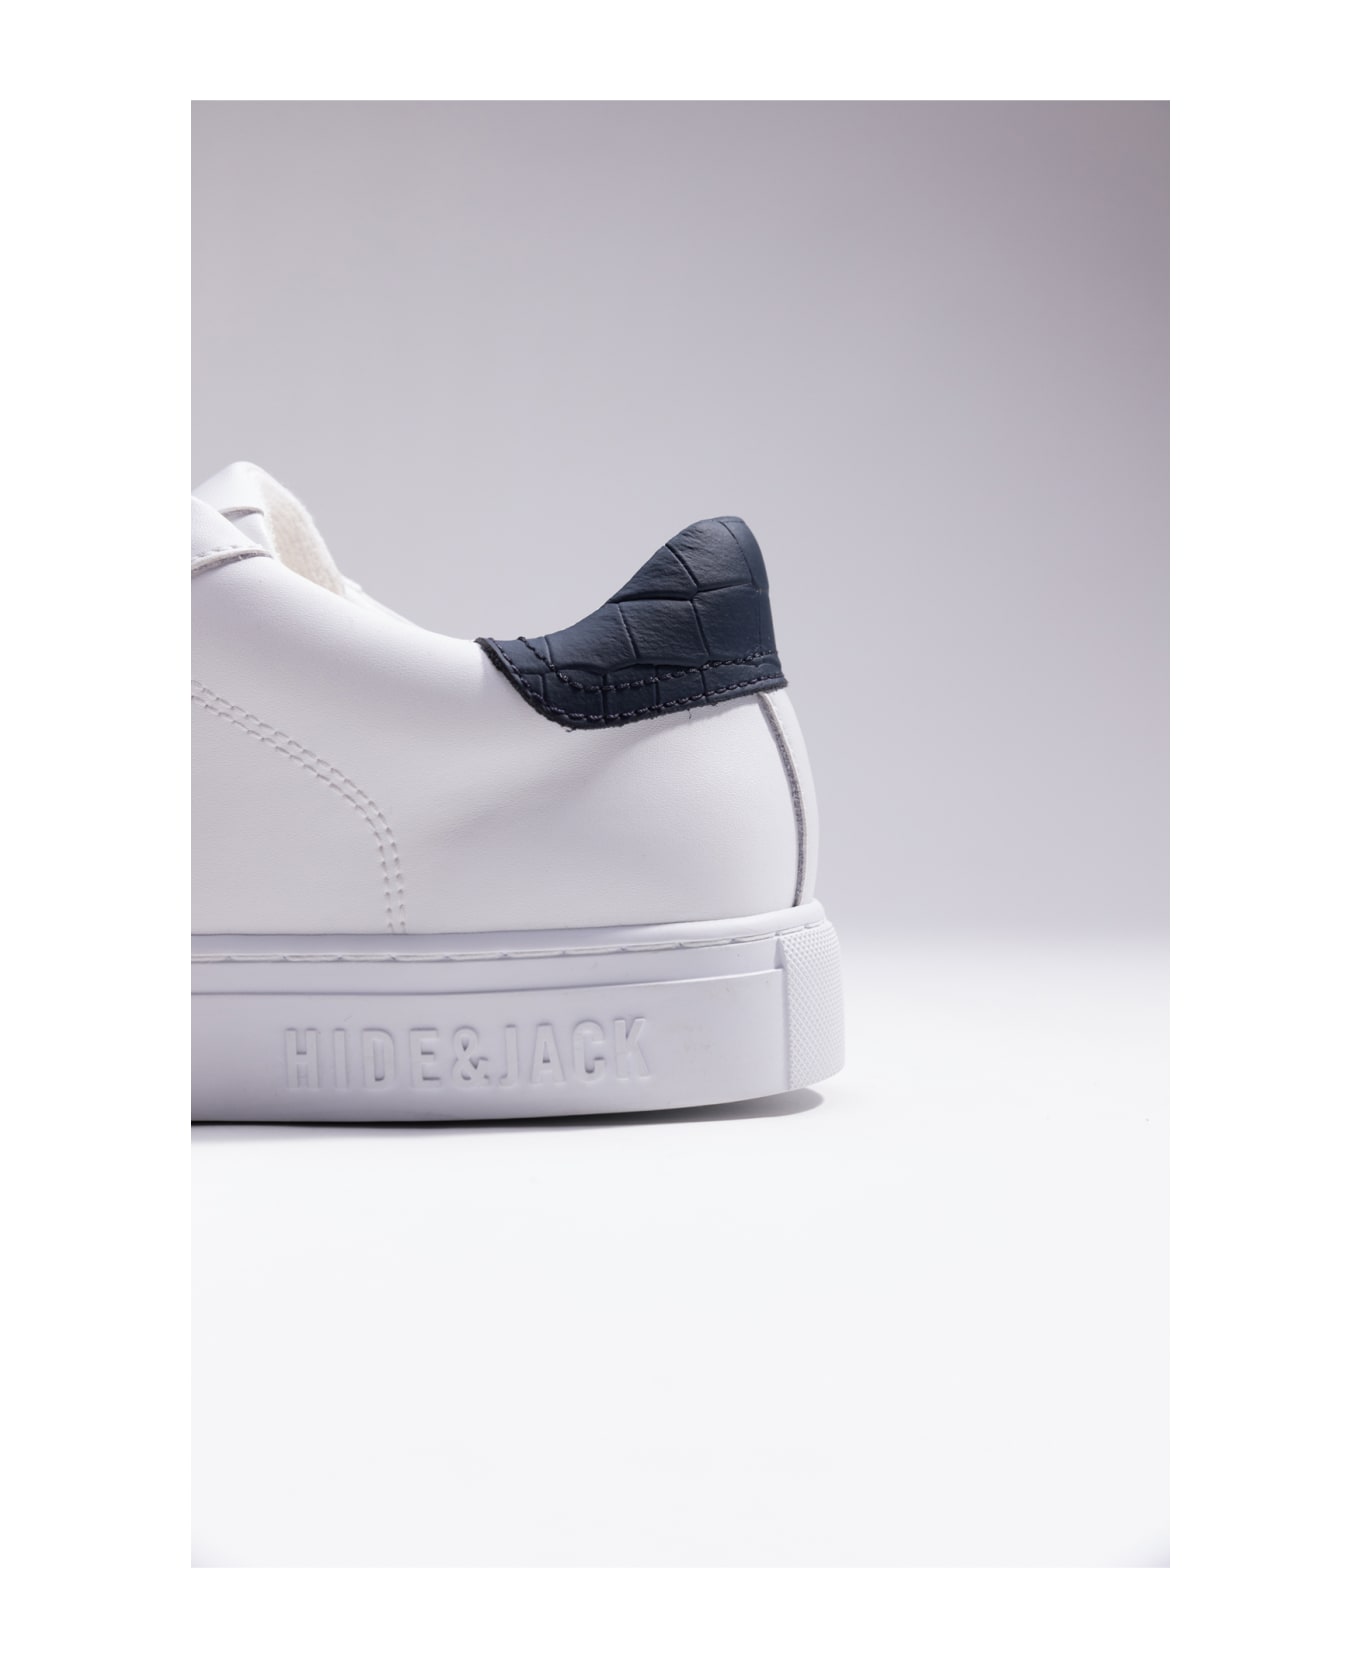 Hide&Jack Low Top Sneaker - Essence Sky Blue White スニーカー